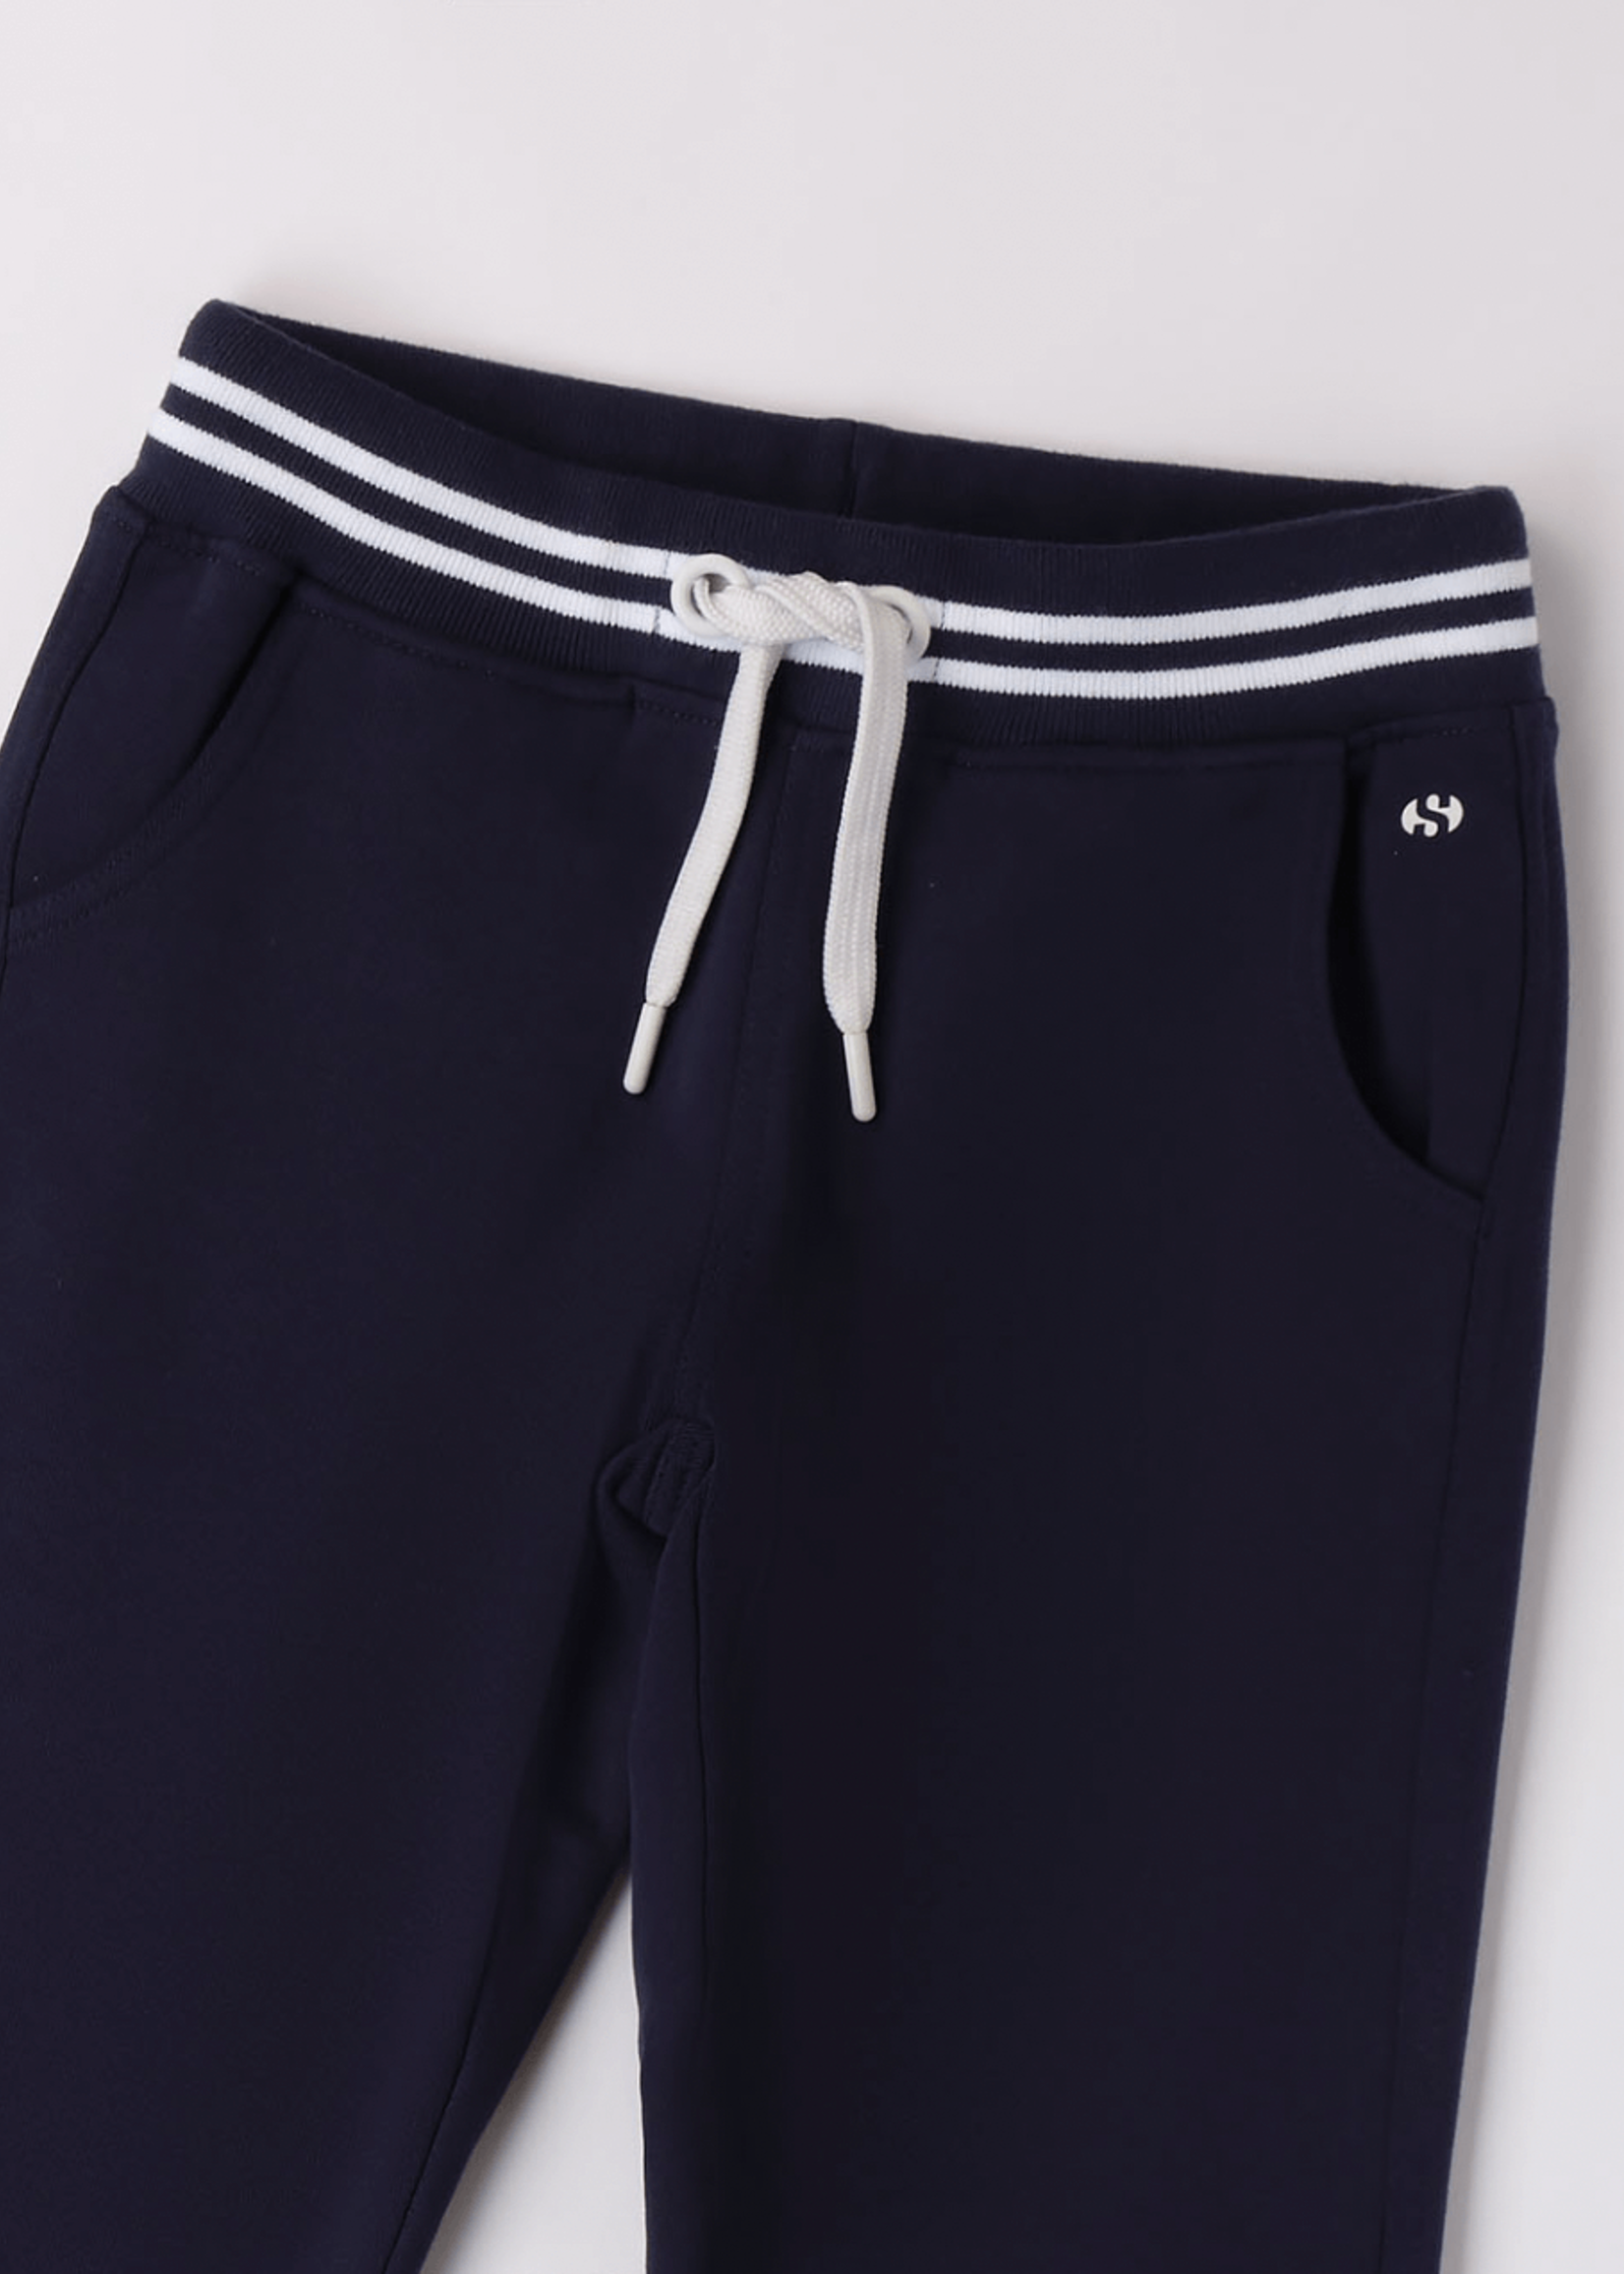 Superga Navy Tennis Trousers